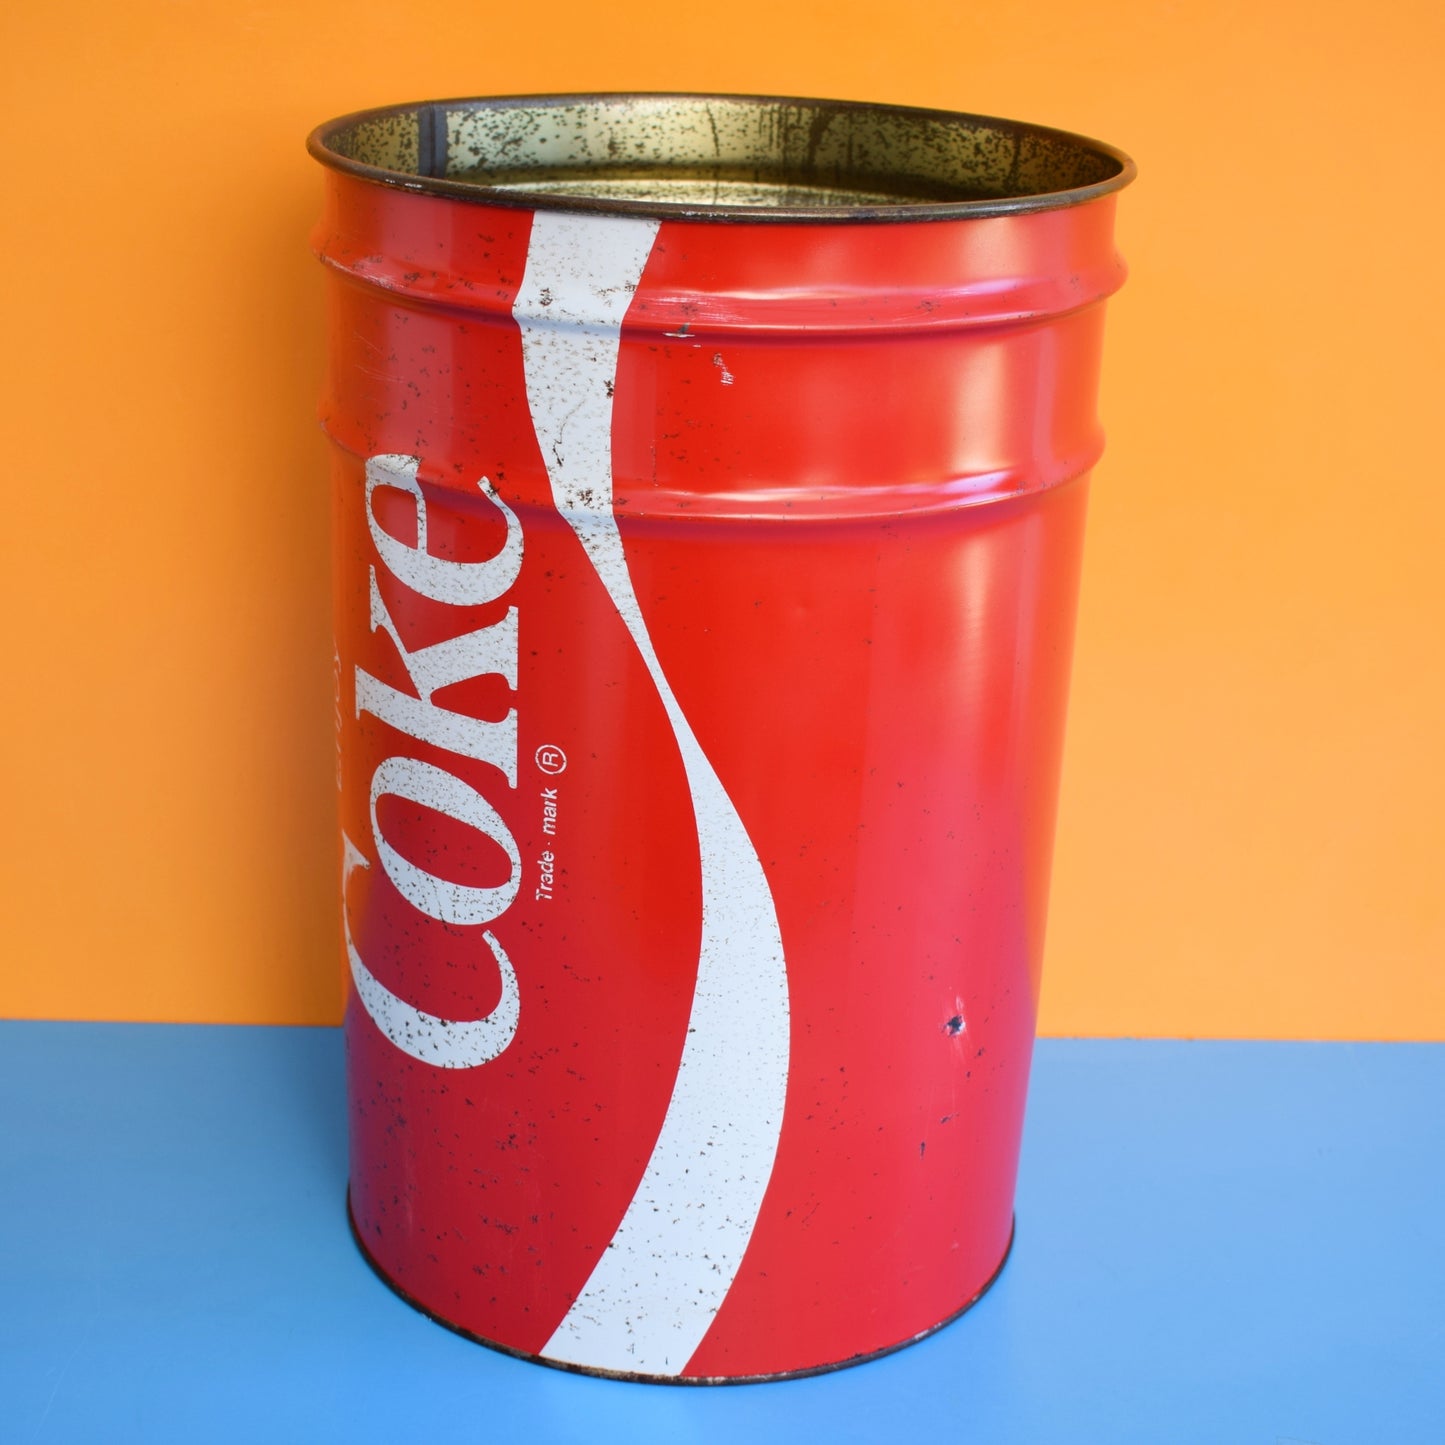 Vintage 1980s Large Metal Bin - Coke